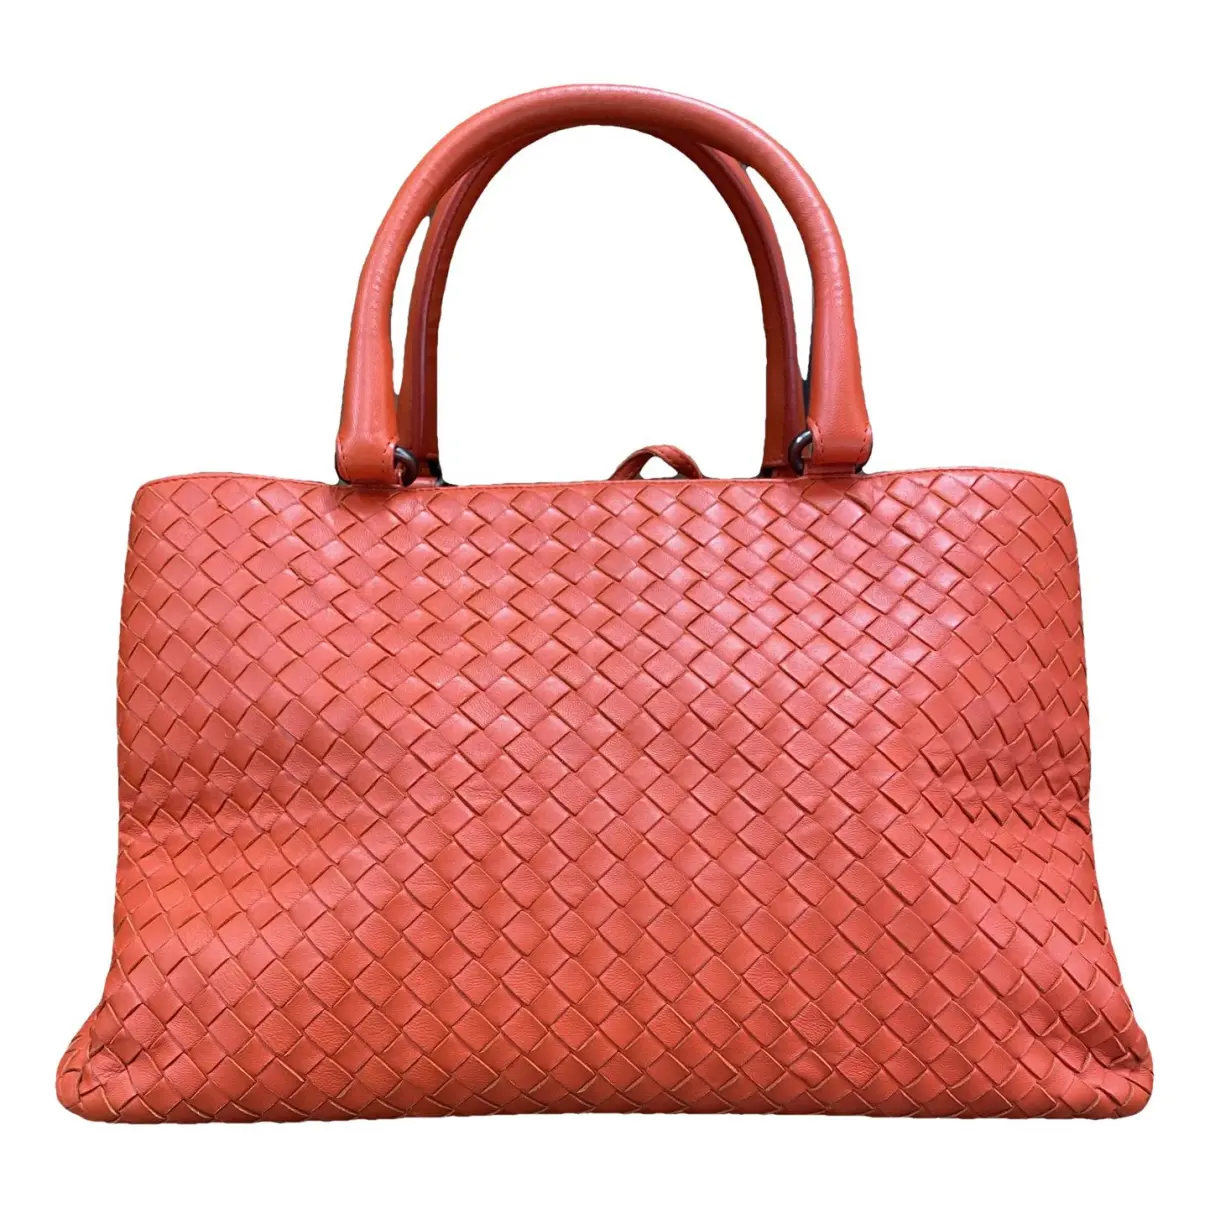 Roma leather handbag Bottega Veneta